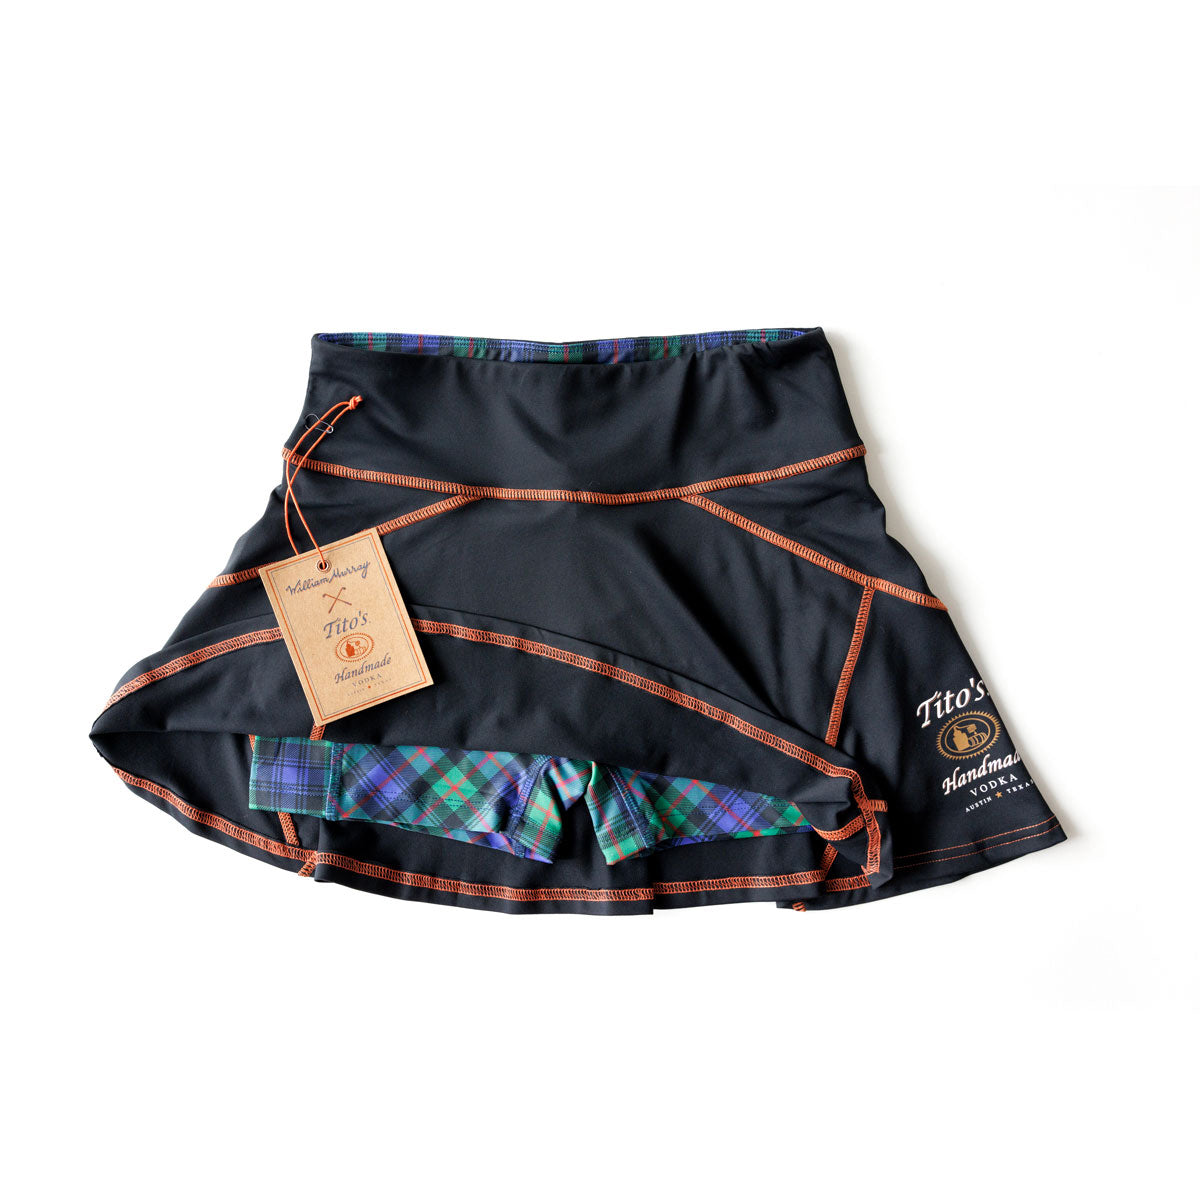 Front of black skort with orange stitching, green and purple plaid shorts, Tito’s Handmade Vodka logo